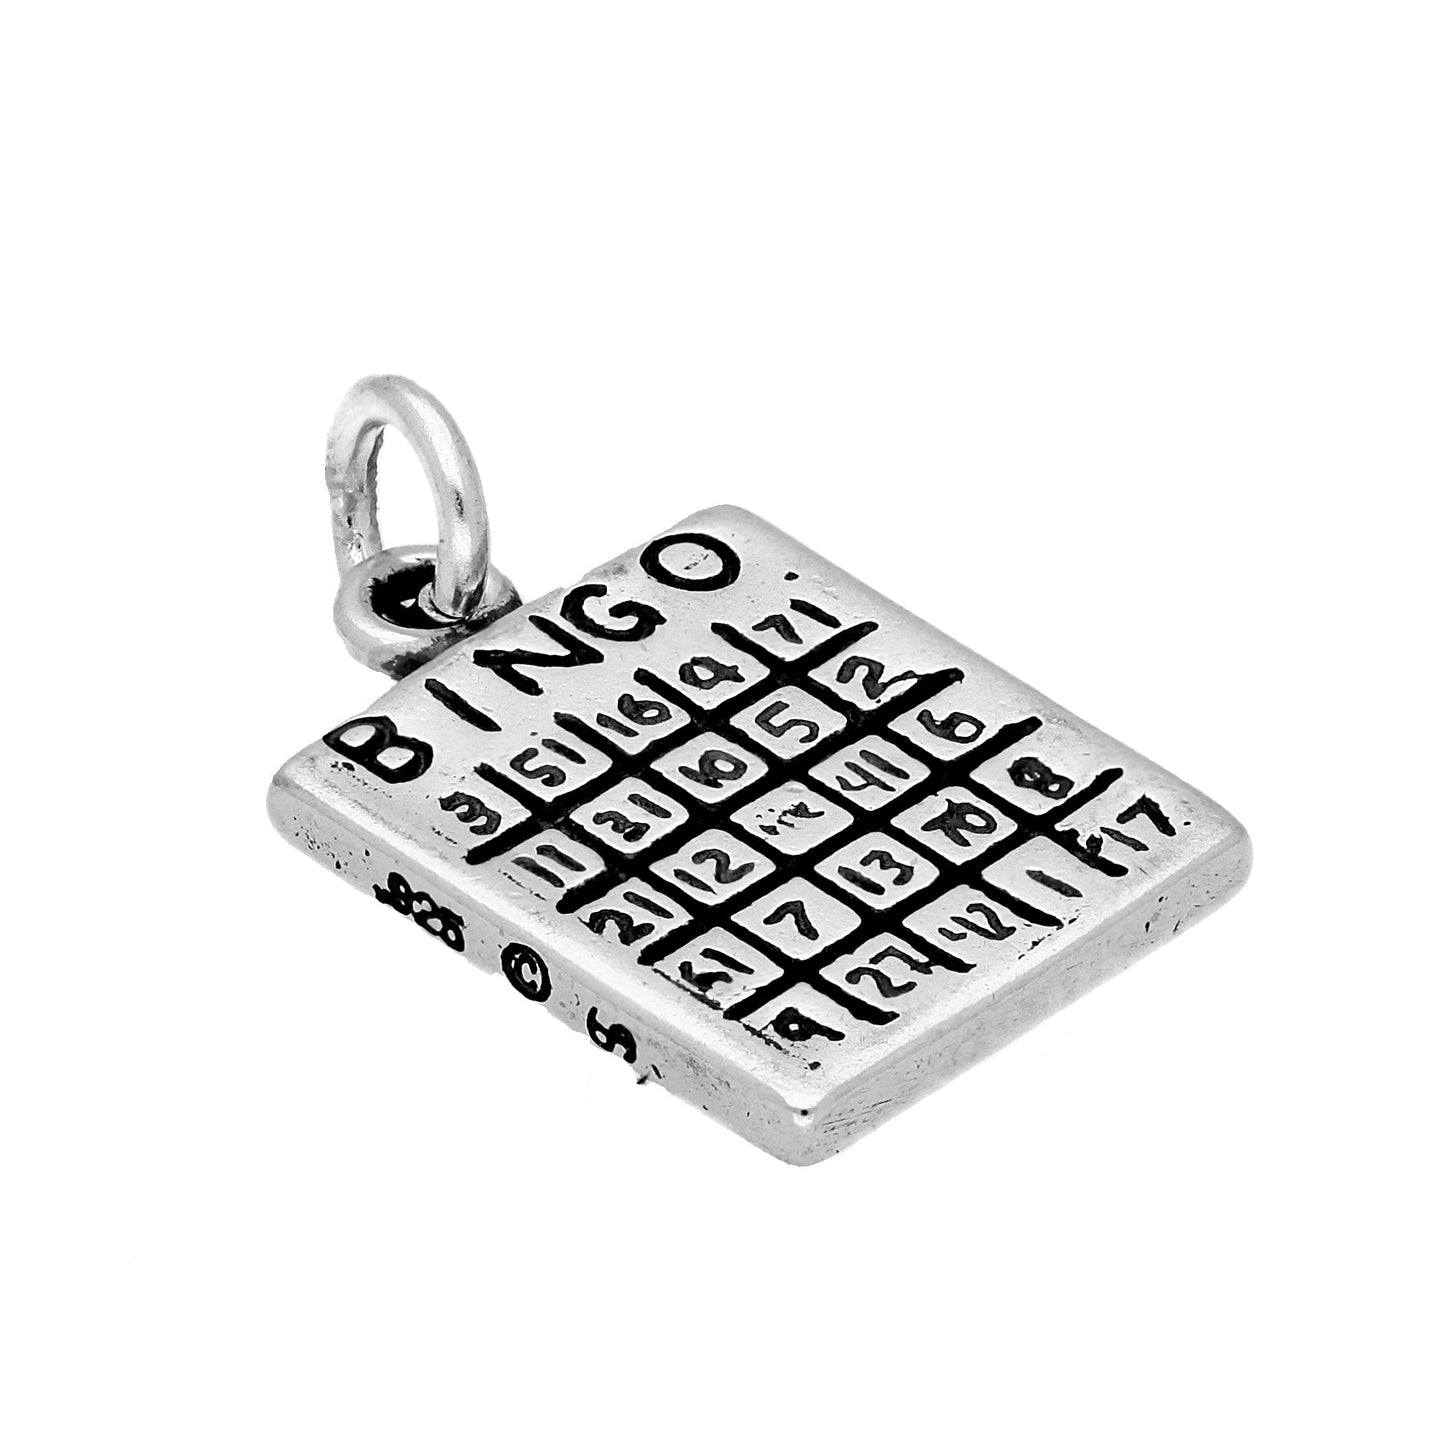 Sterling Silver Bingo Card Charm